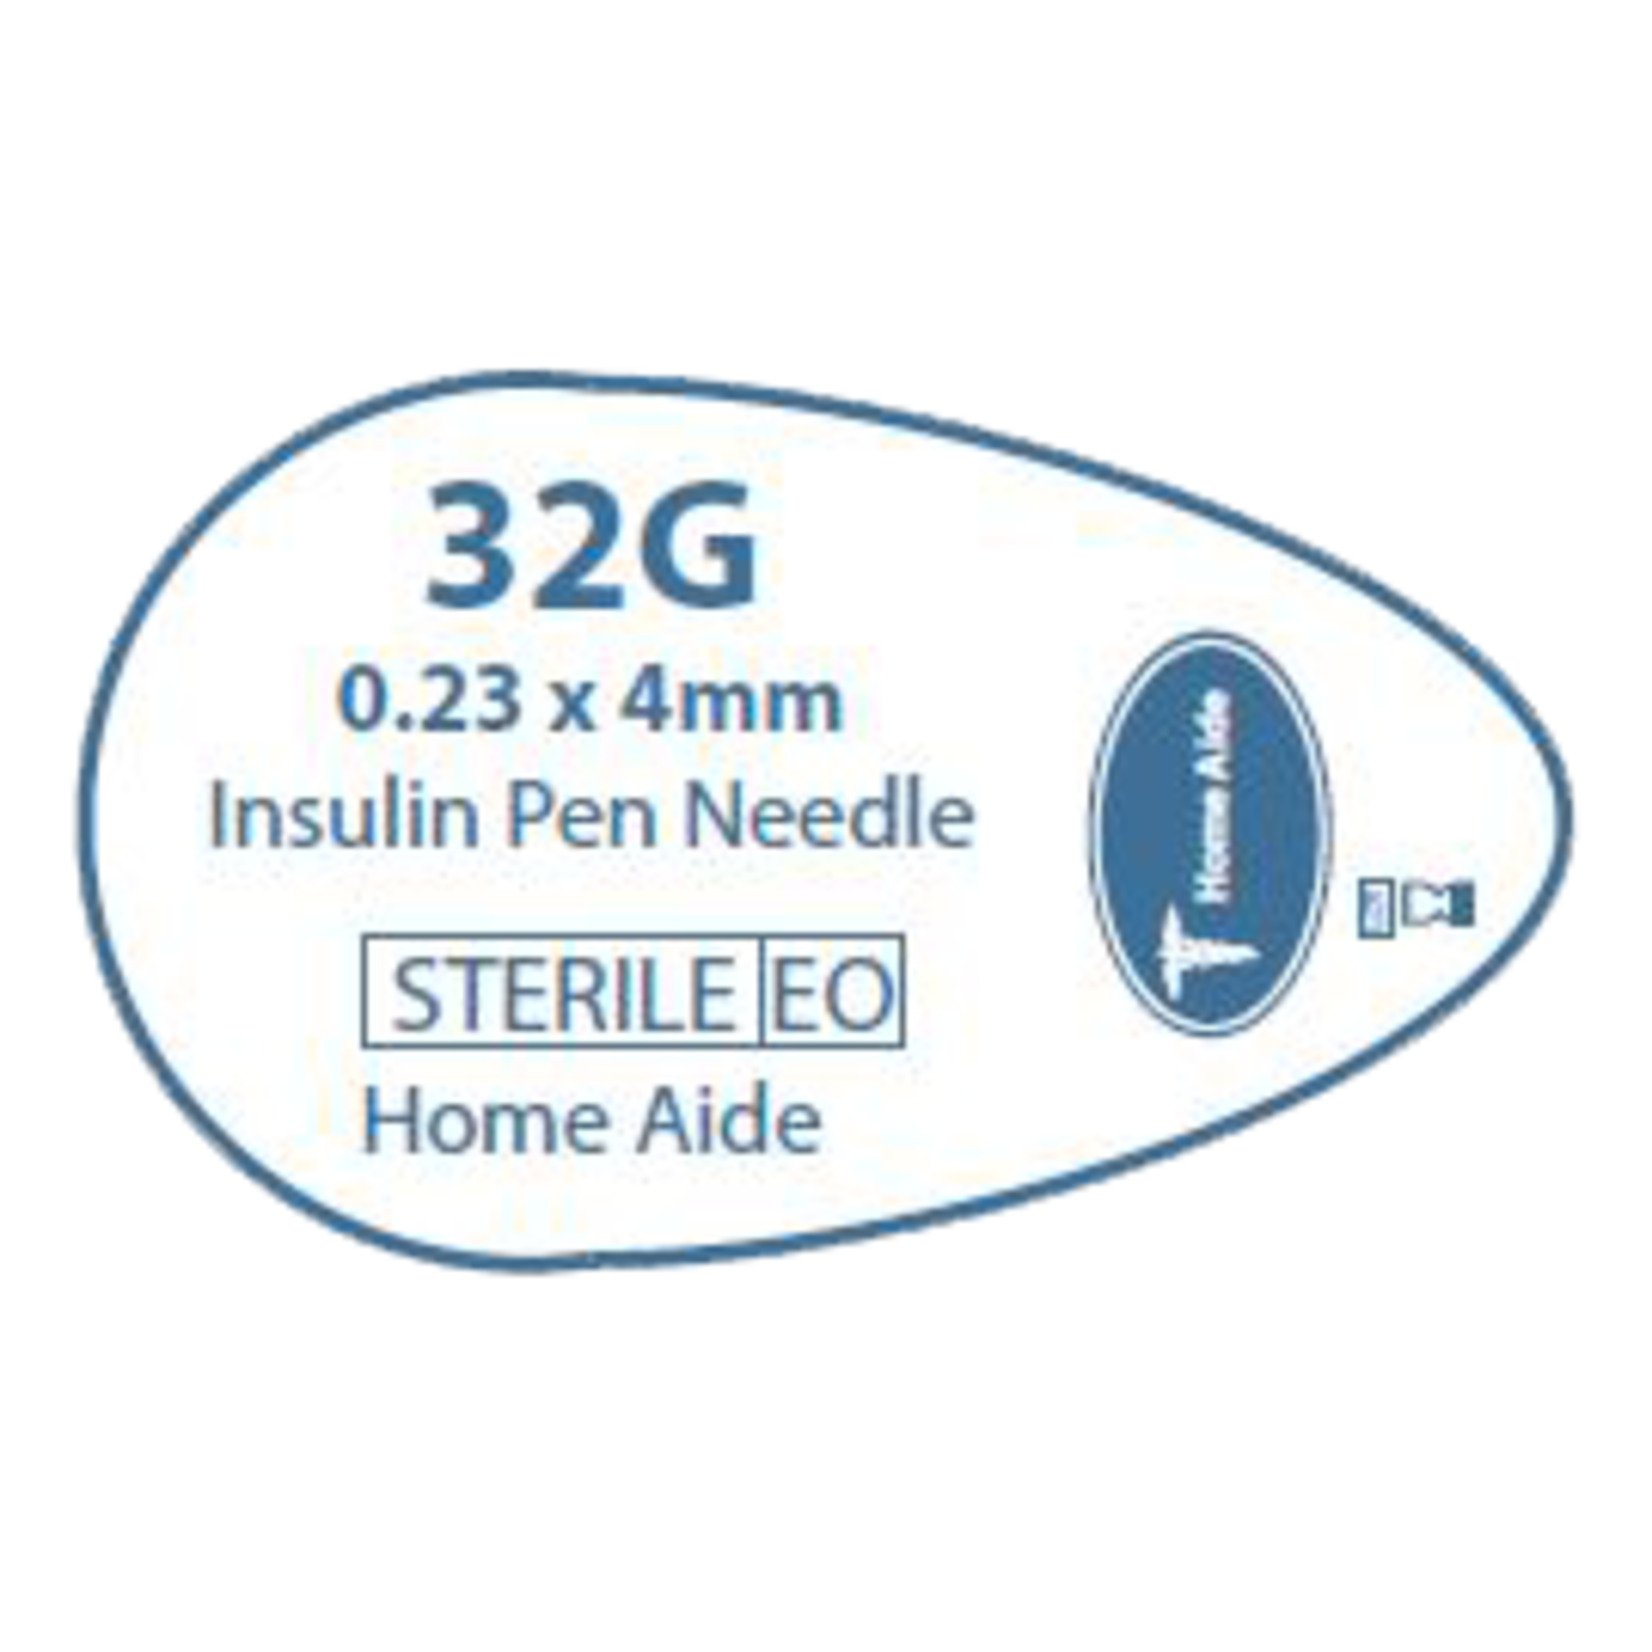 Home Aide Easy Comfort Pen Needles 32G 4mm  (50/case) - NDC# 91237-0001-77